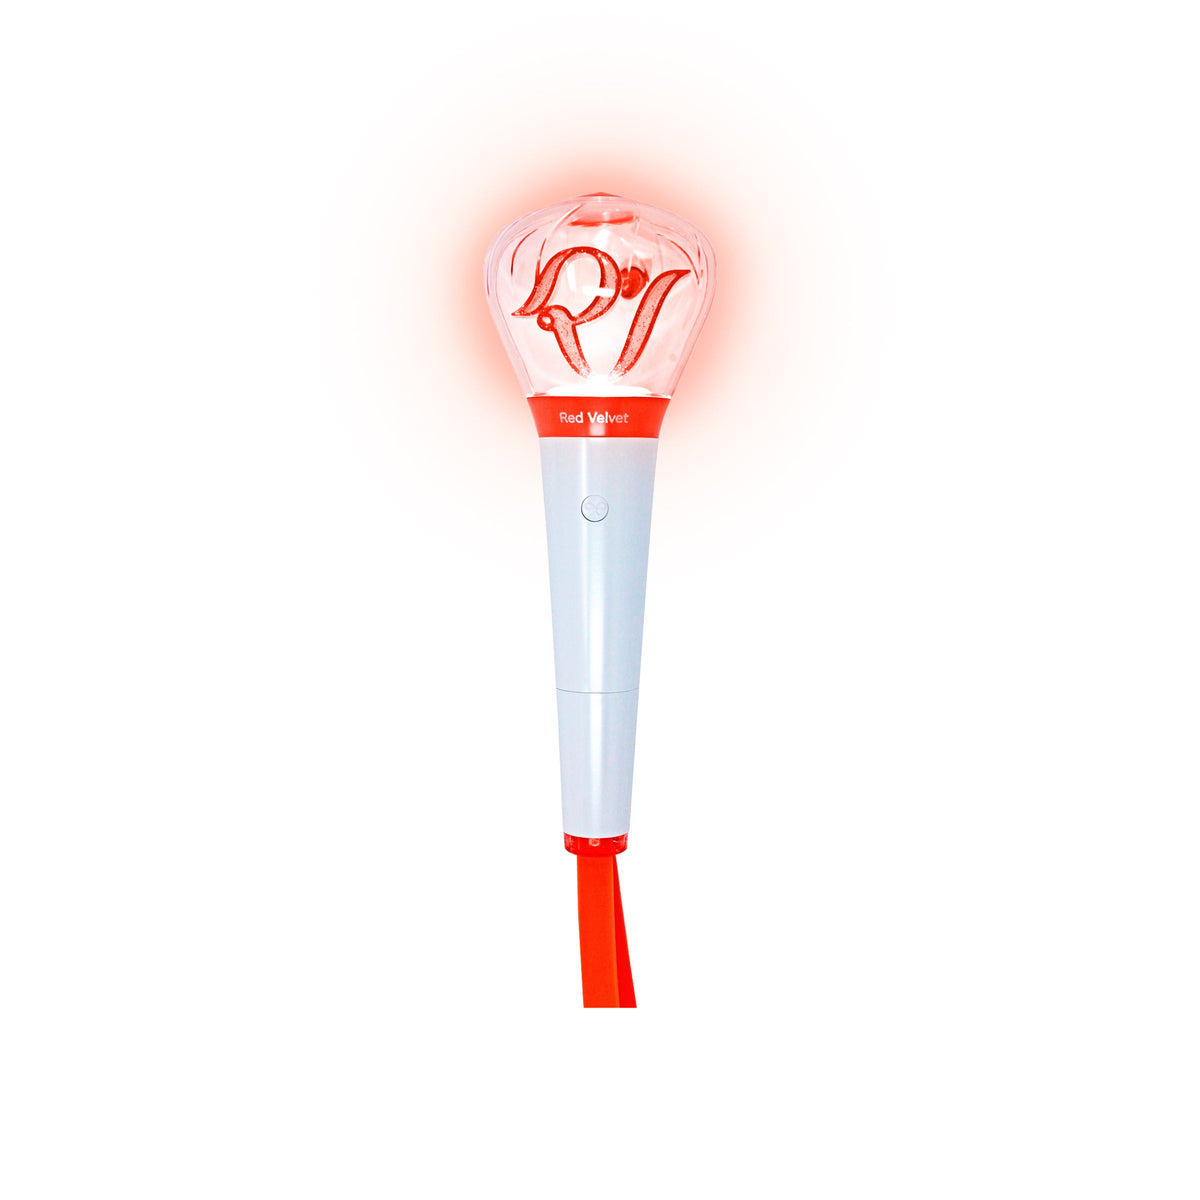 Red Velvet Official Light Stick Main Product Image - Image 5